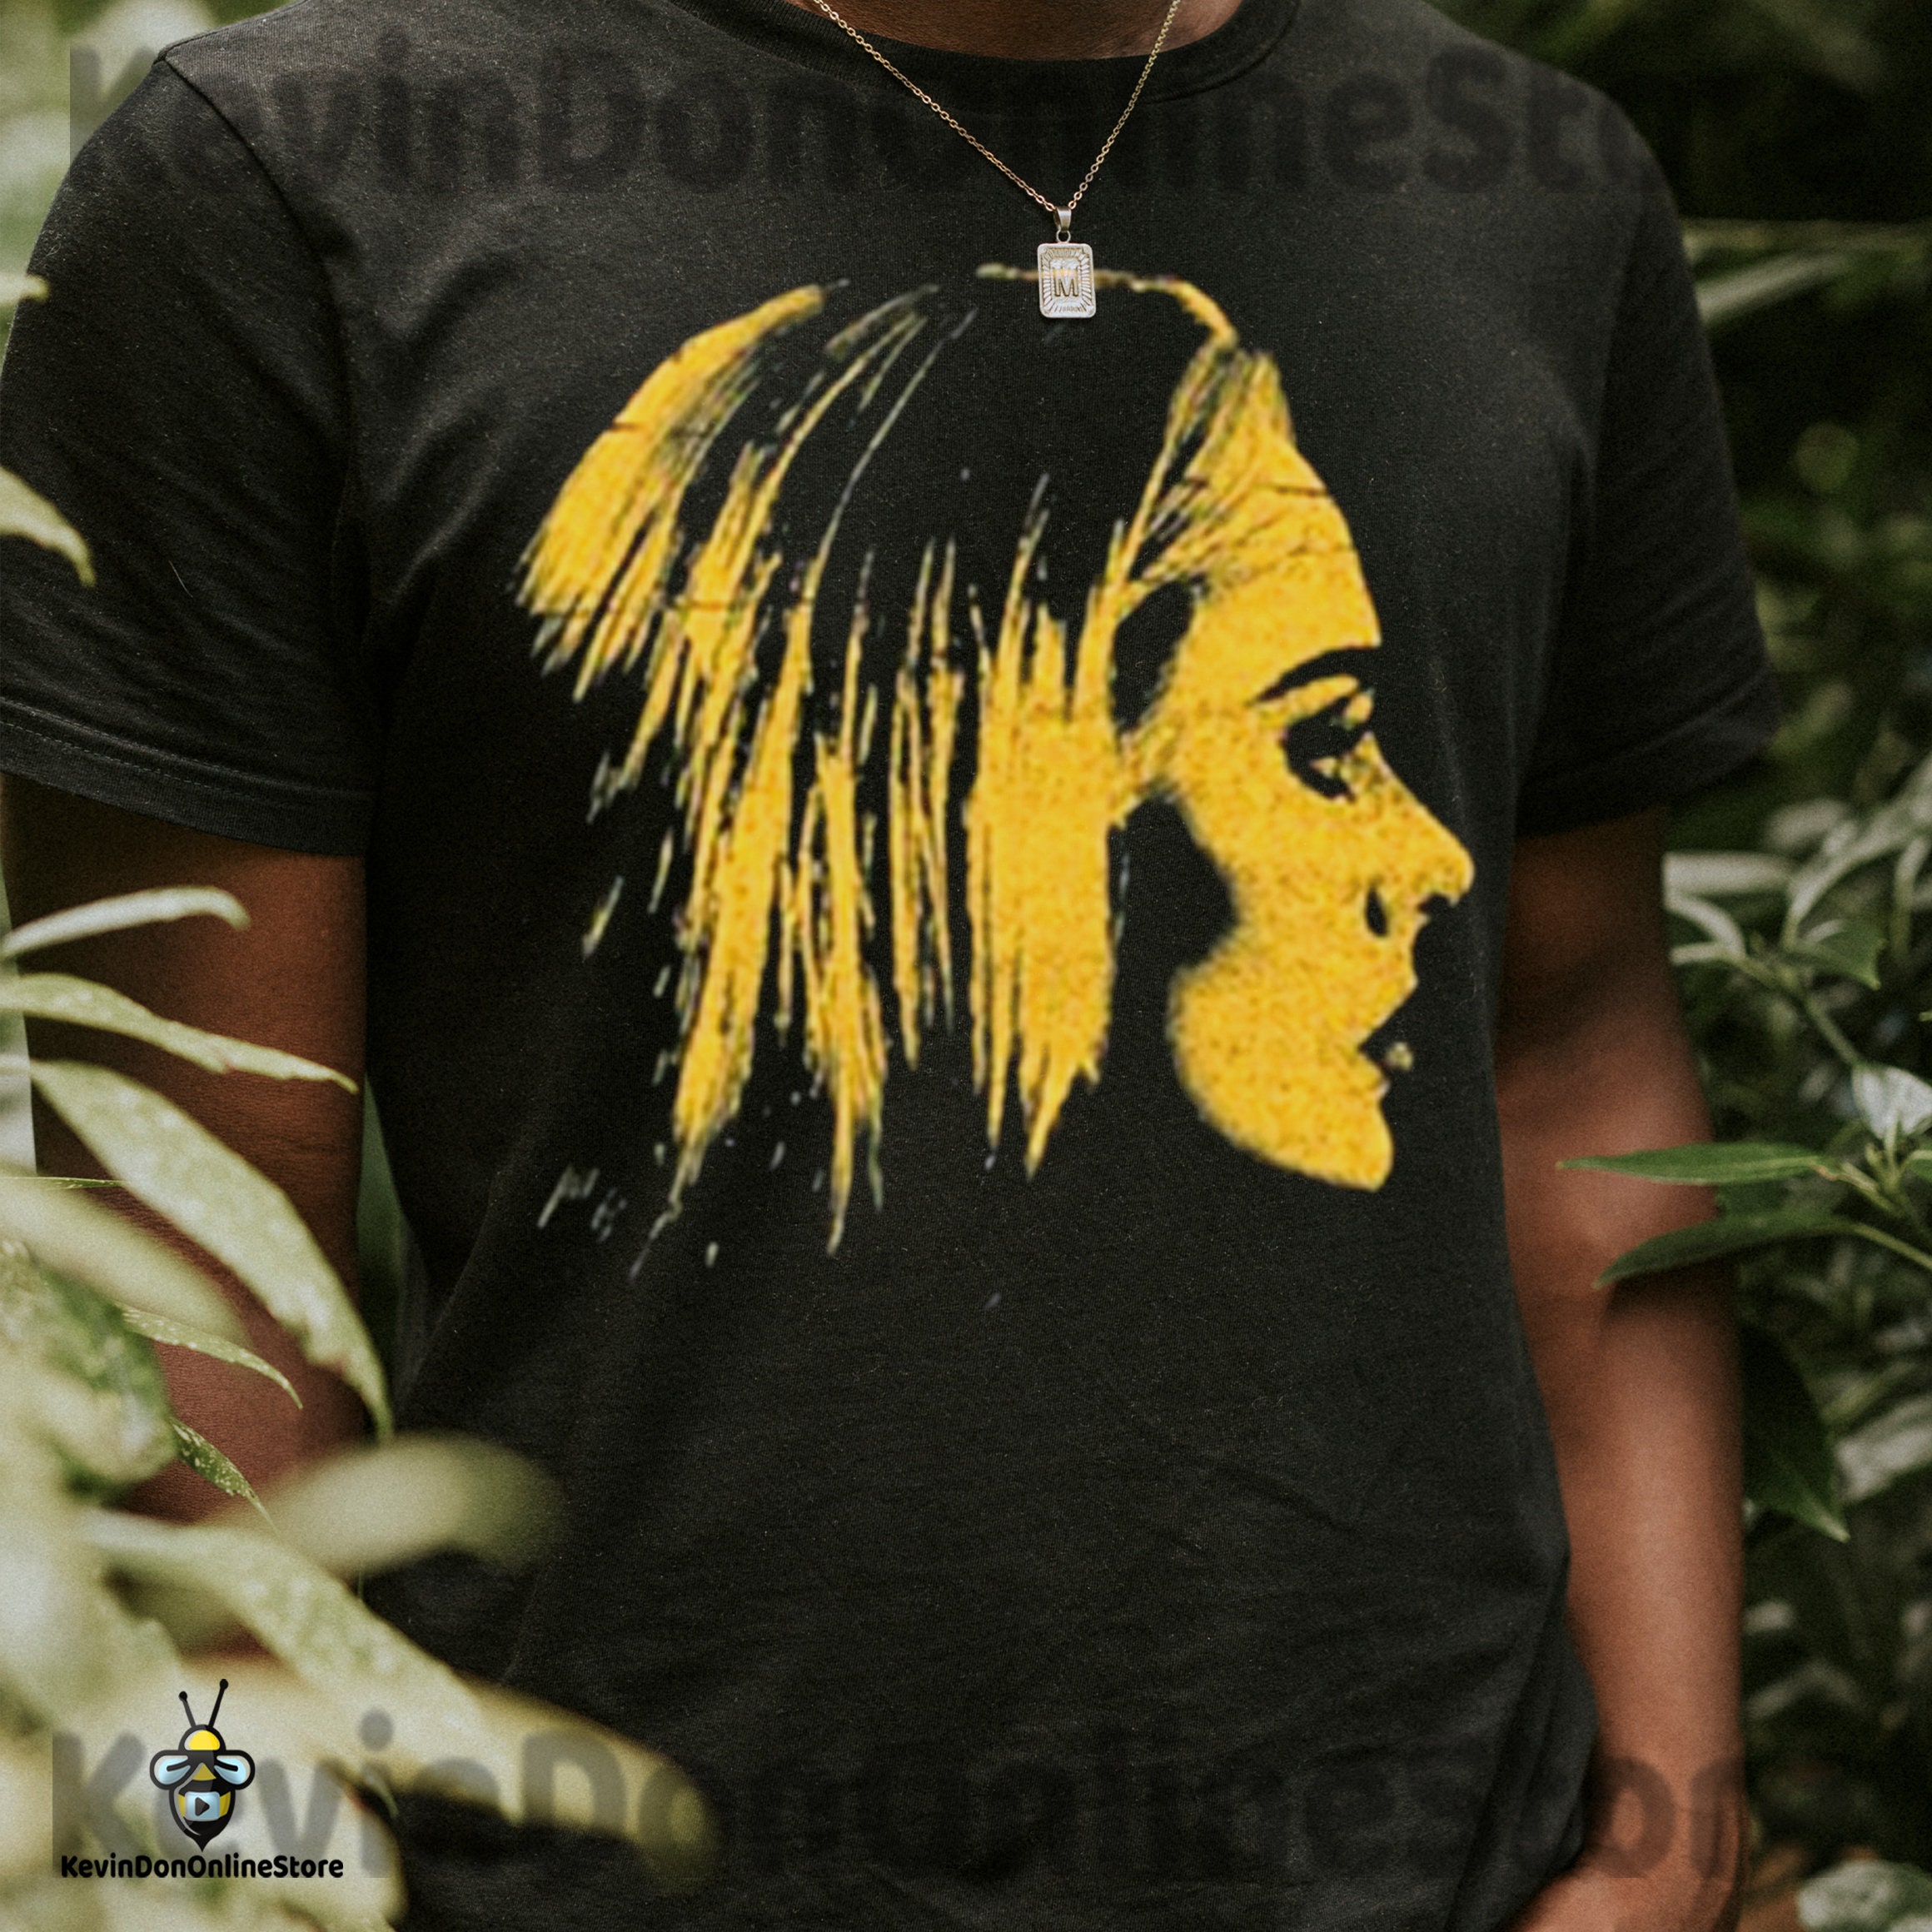 Discover Adele T-shirt, Adele Merch